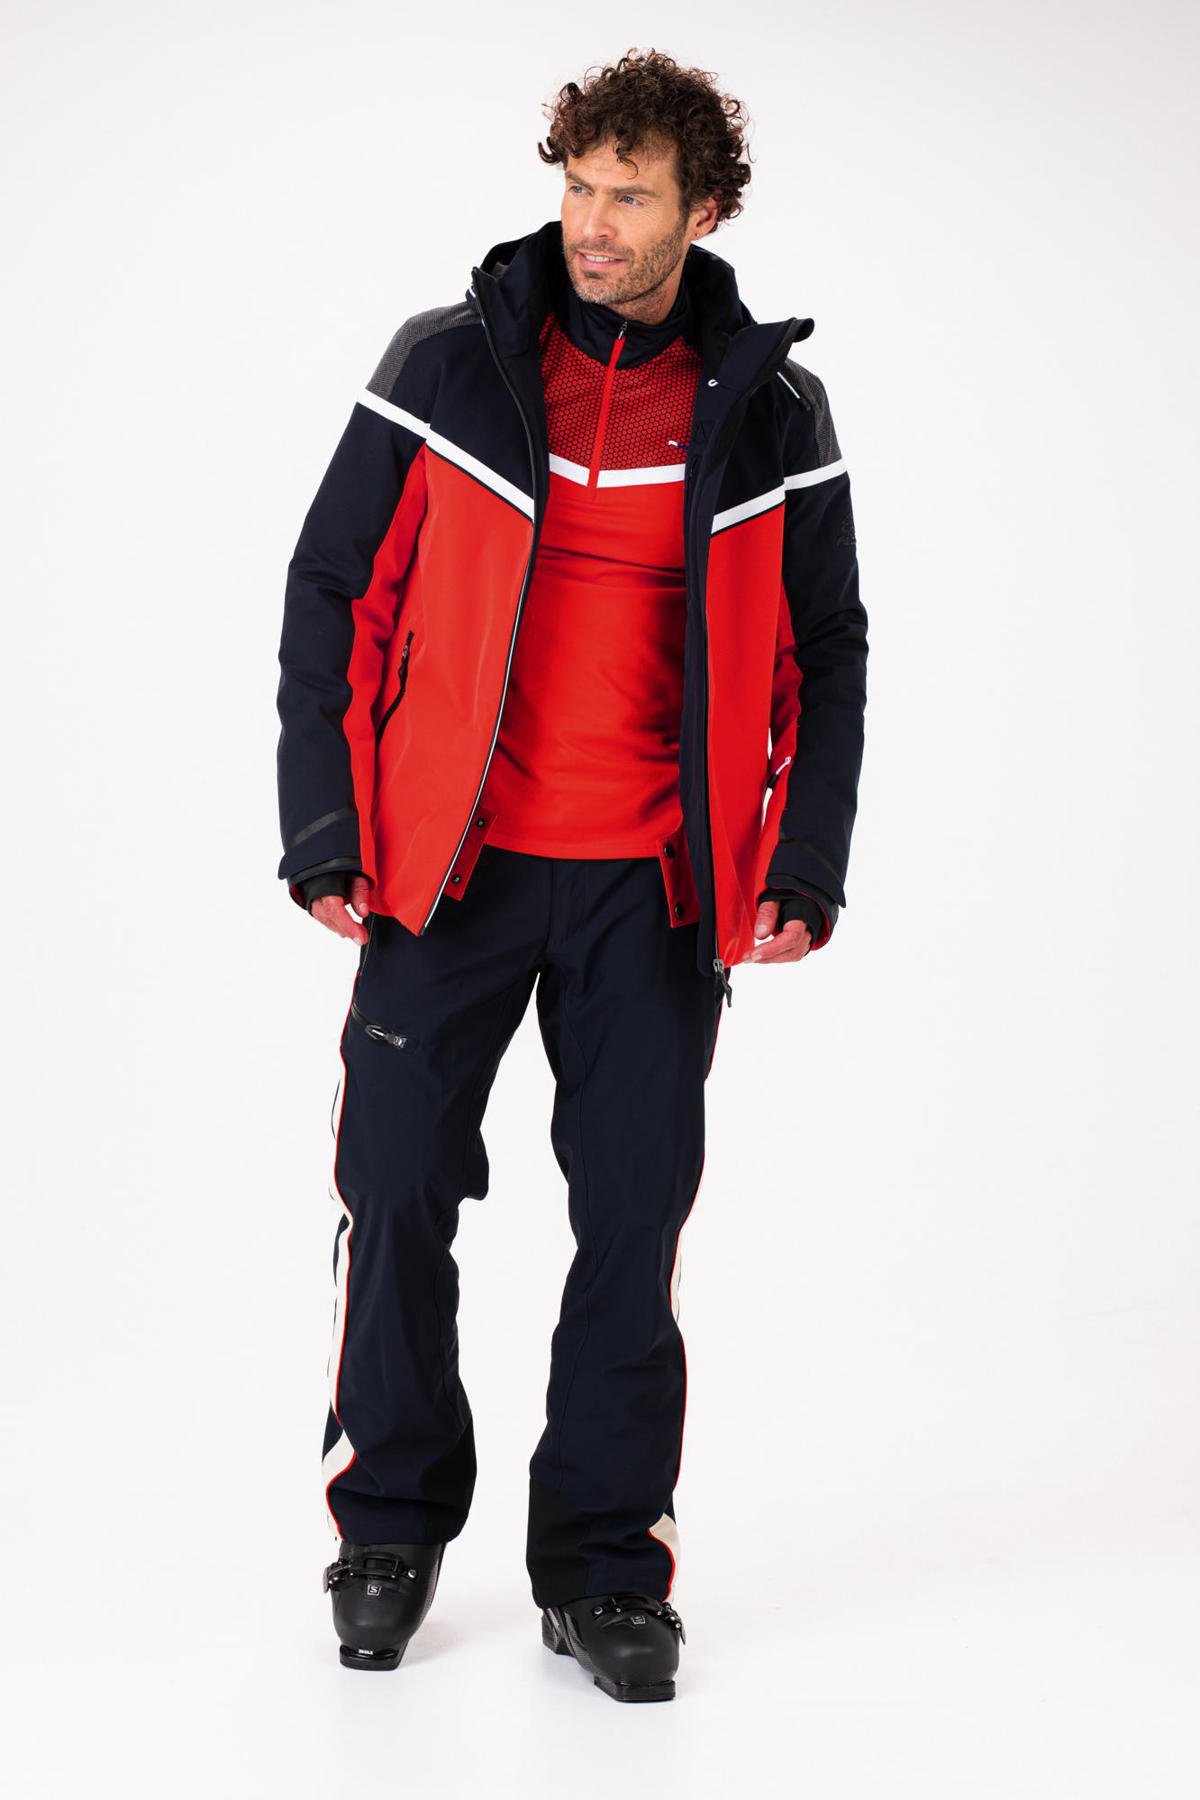 Walter Cunningham Verwachting Decimale Falcon ski-jack Rogan oranje/zwart | wehkamp